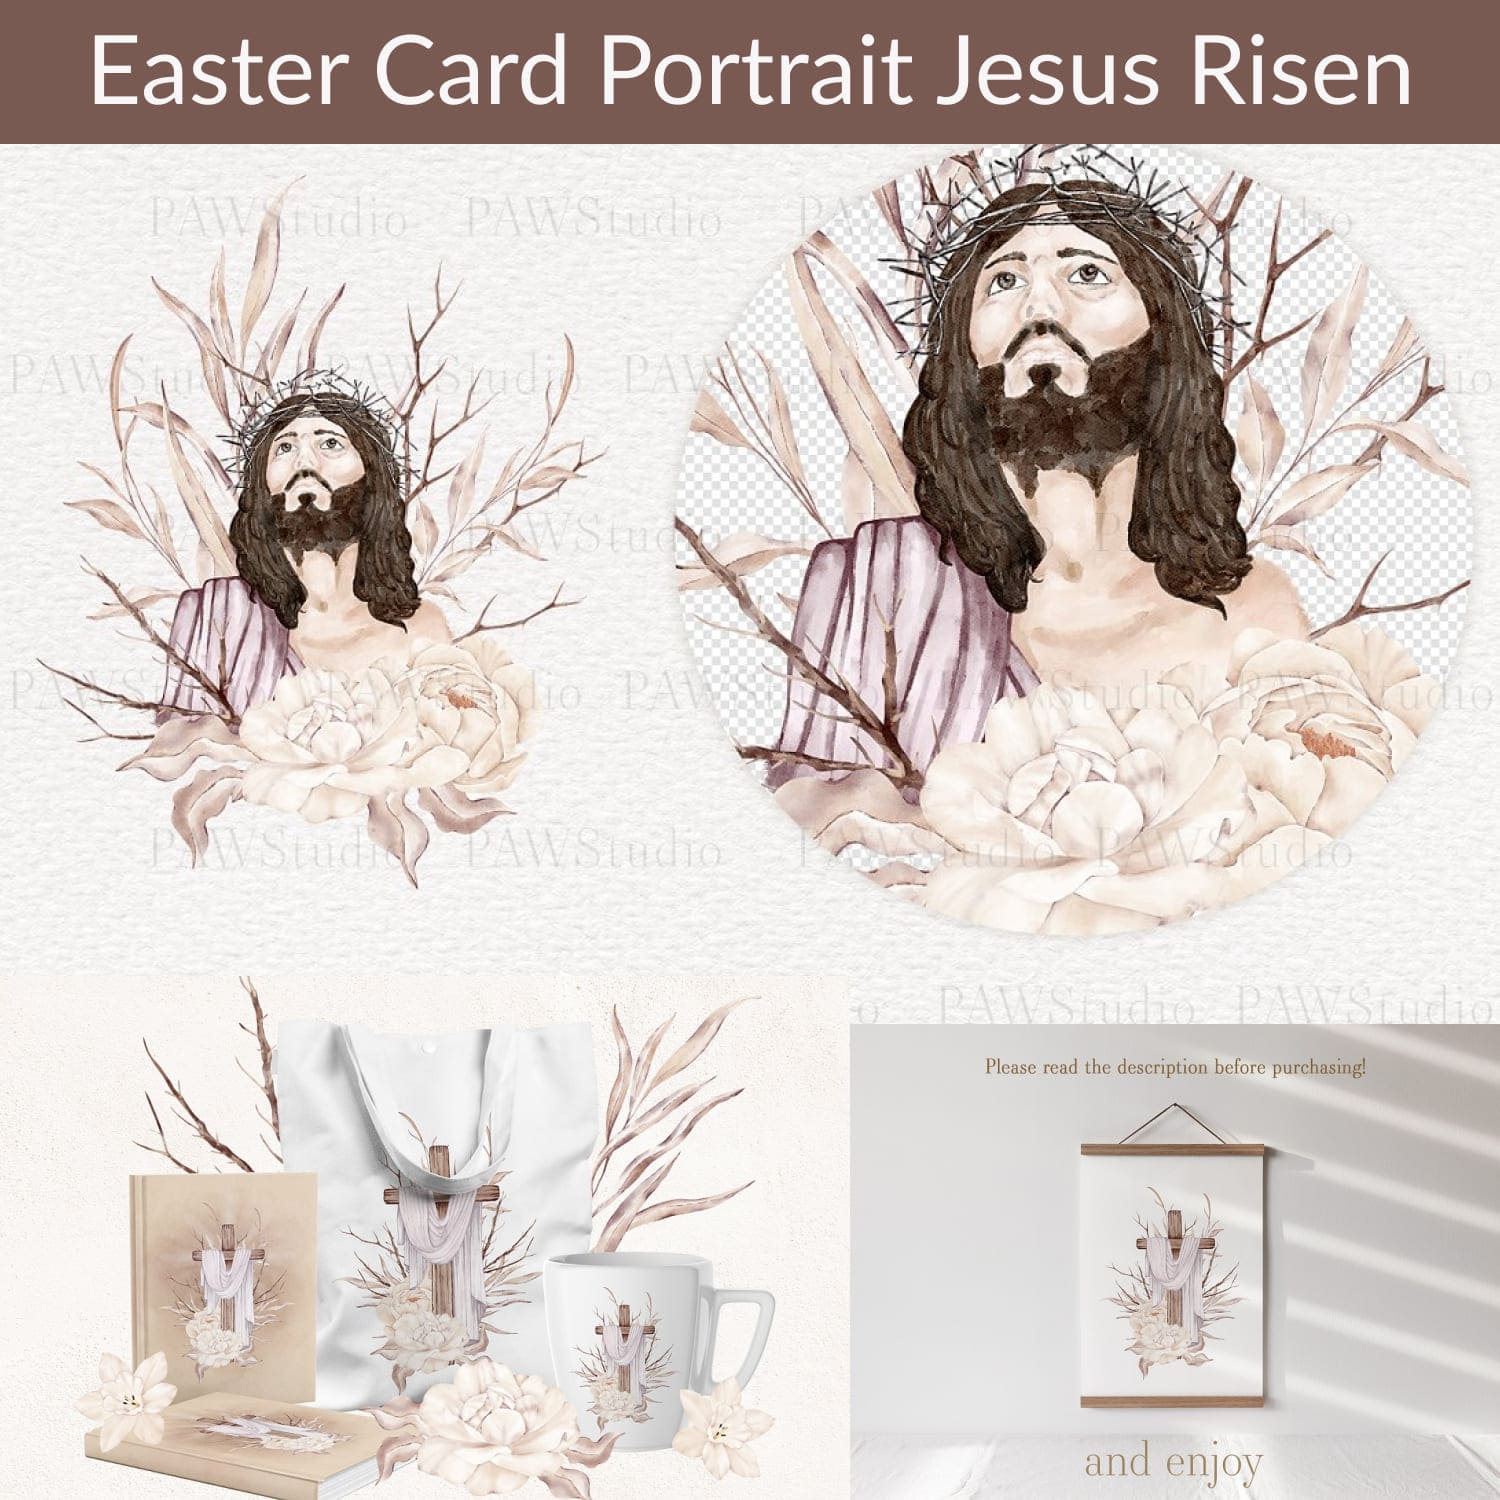 Easter Card Portrait Jesus Risen - main image preview.